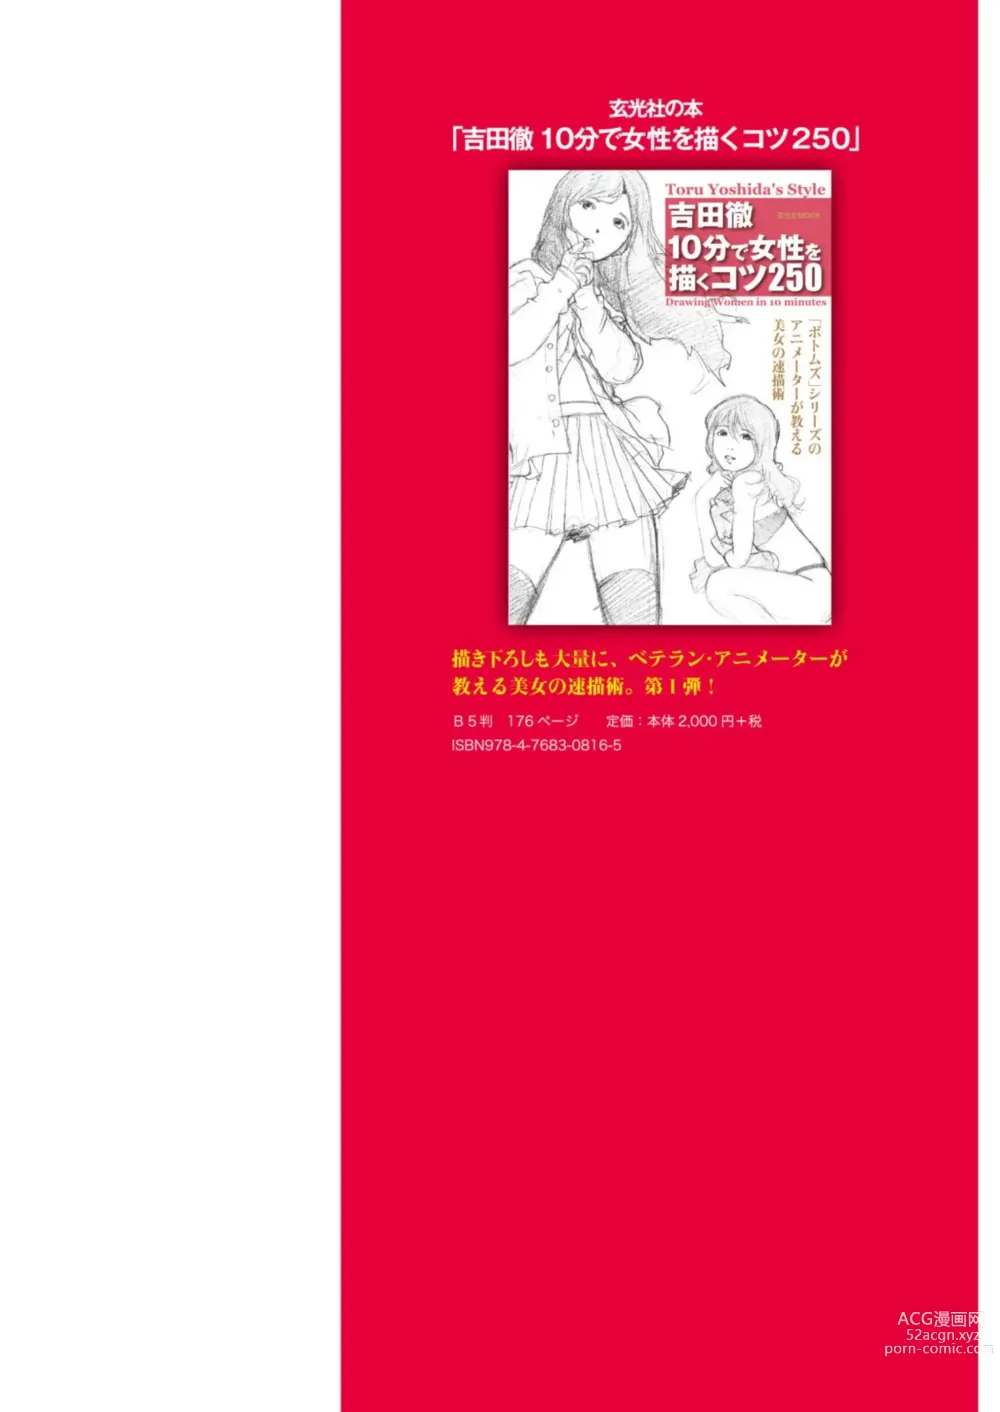 Page 159 of manga Toru Yoshida Tips for drawing women in 10 minutes 270 Uniforms